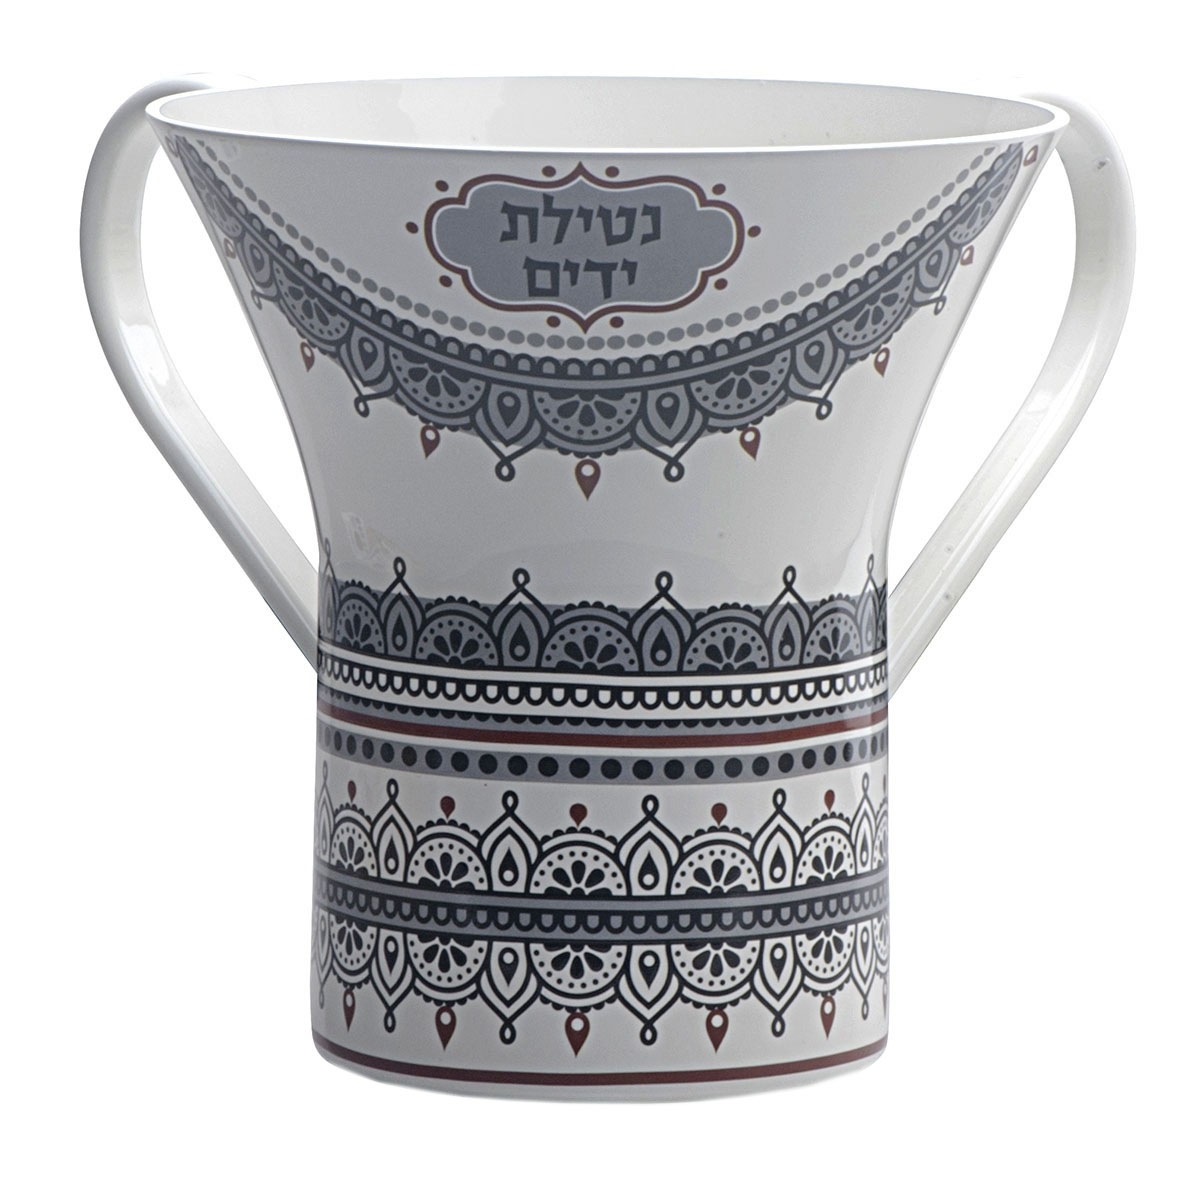 Dorit Judaica Ornate Netilat Yadayim Washing Cup - 1